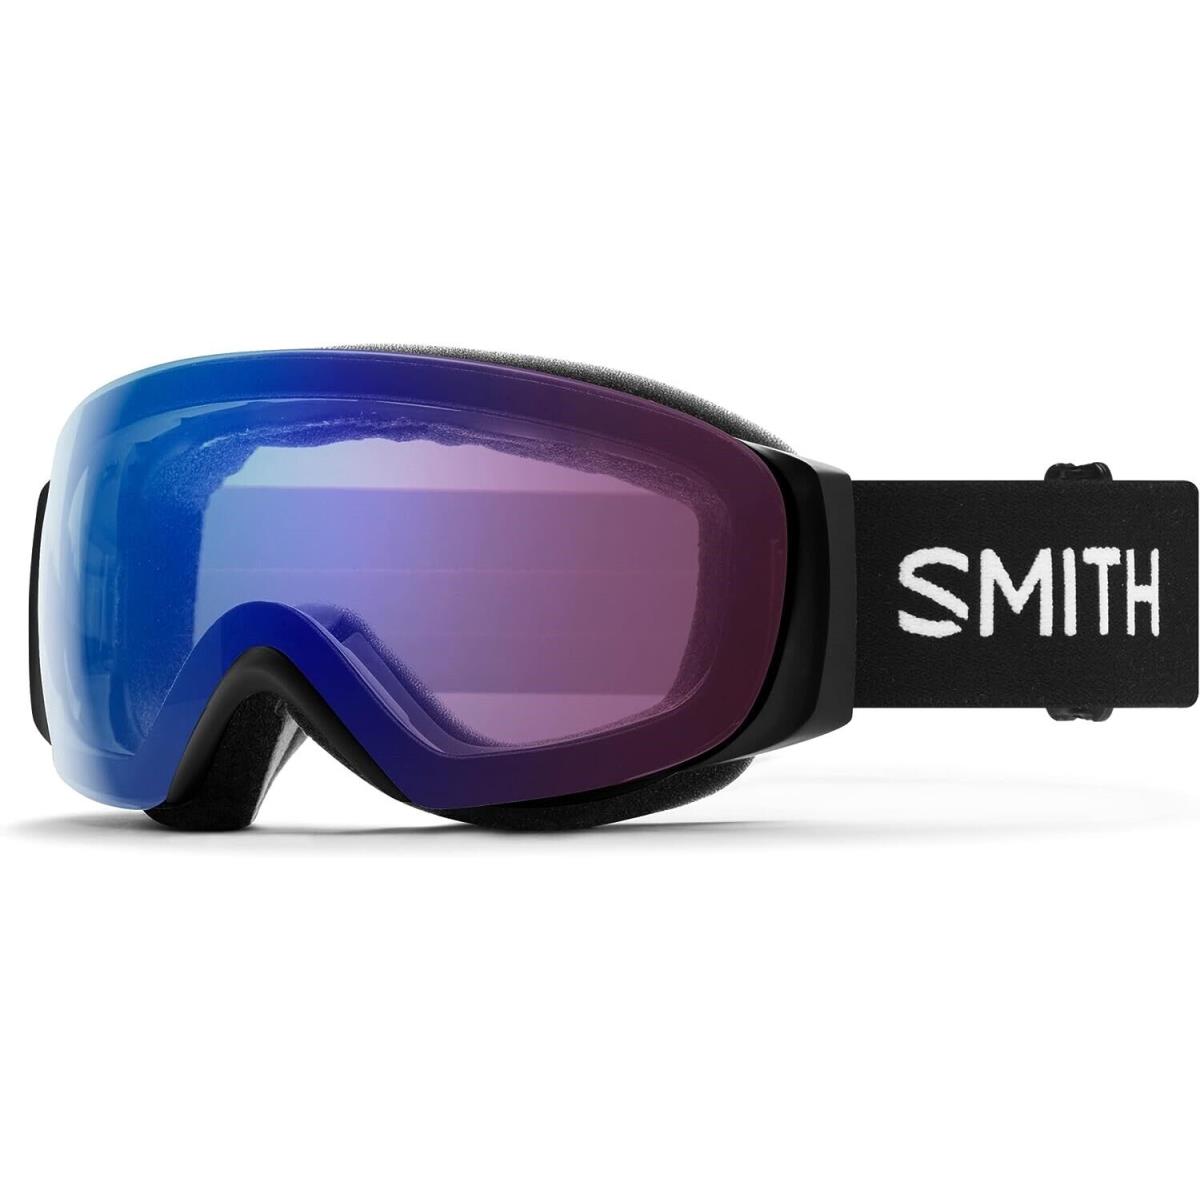 Smith I/o Mag S Snow Goggles Black Chromapop Photochromic Rose Flash + Bonus